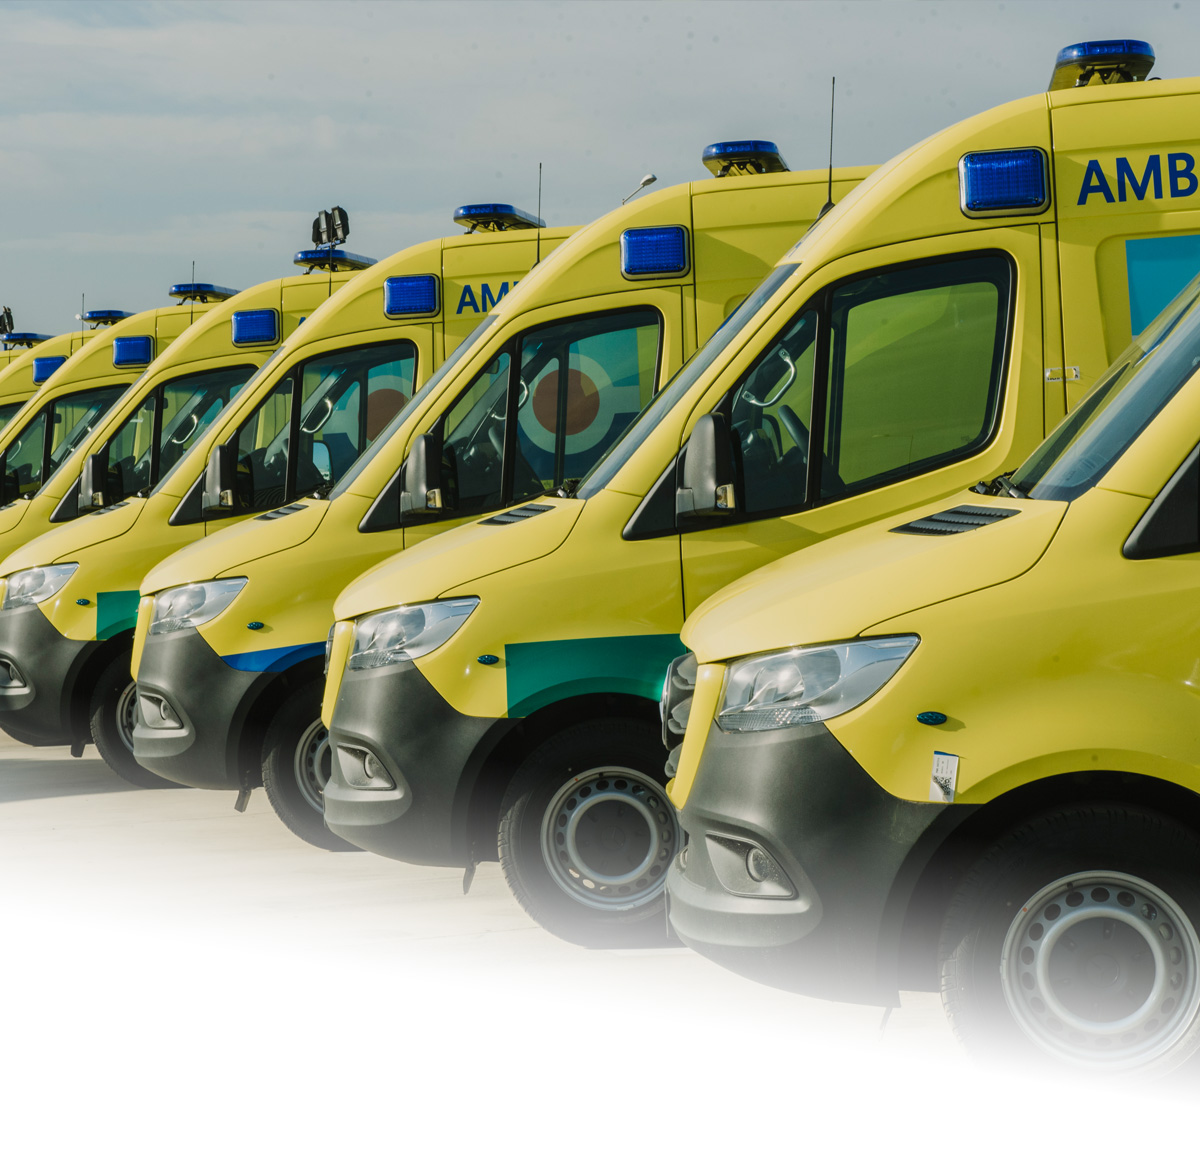 https://ambulancias-malaga.es/wp-content/uploads/2020/04/360-ambulancias.jpg